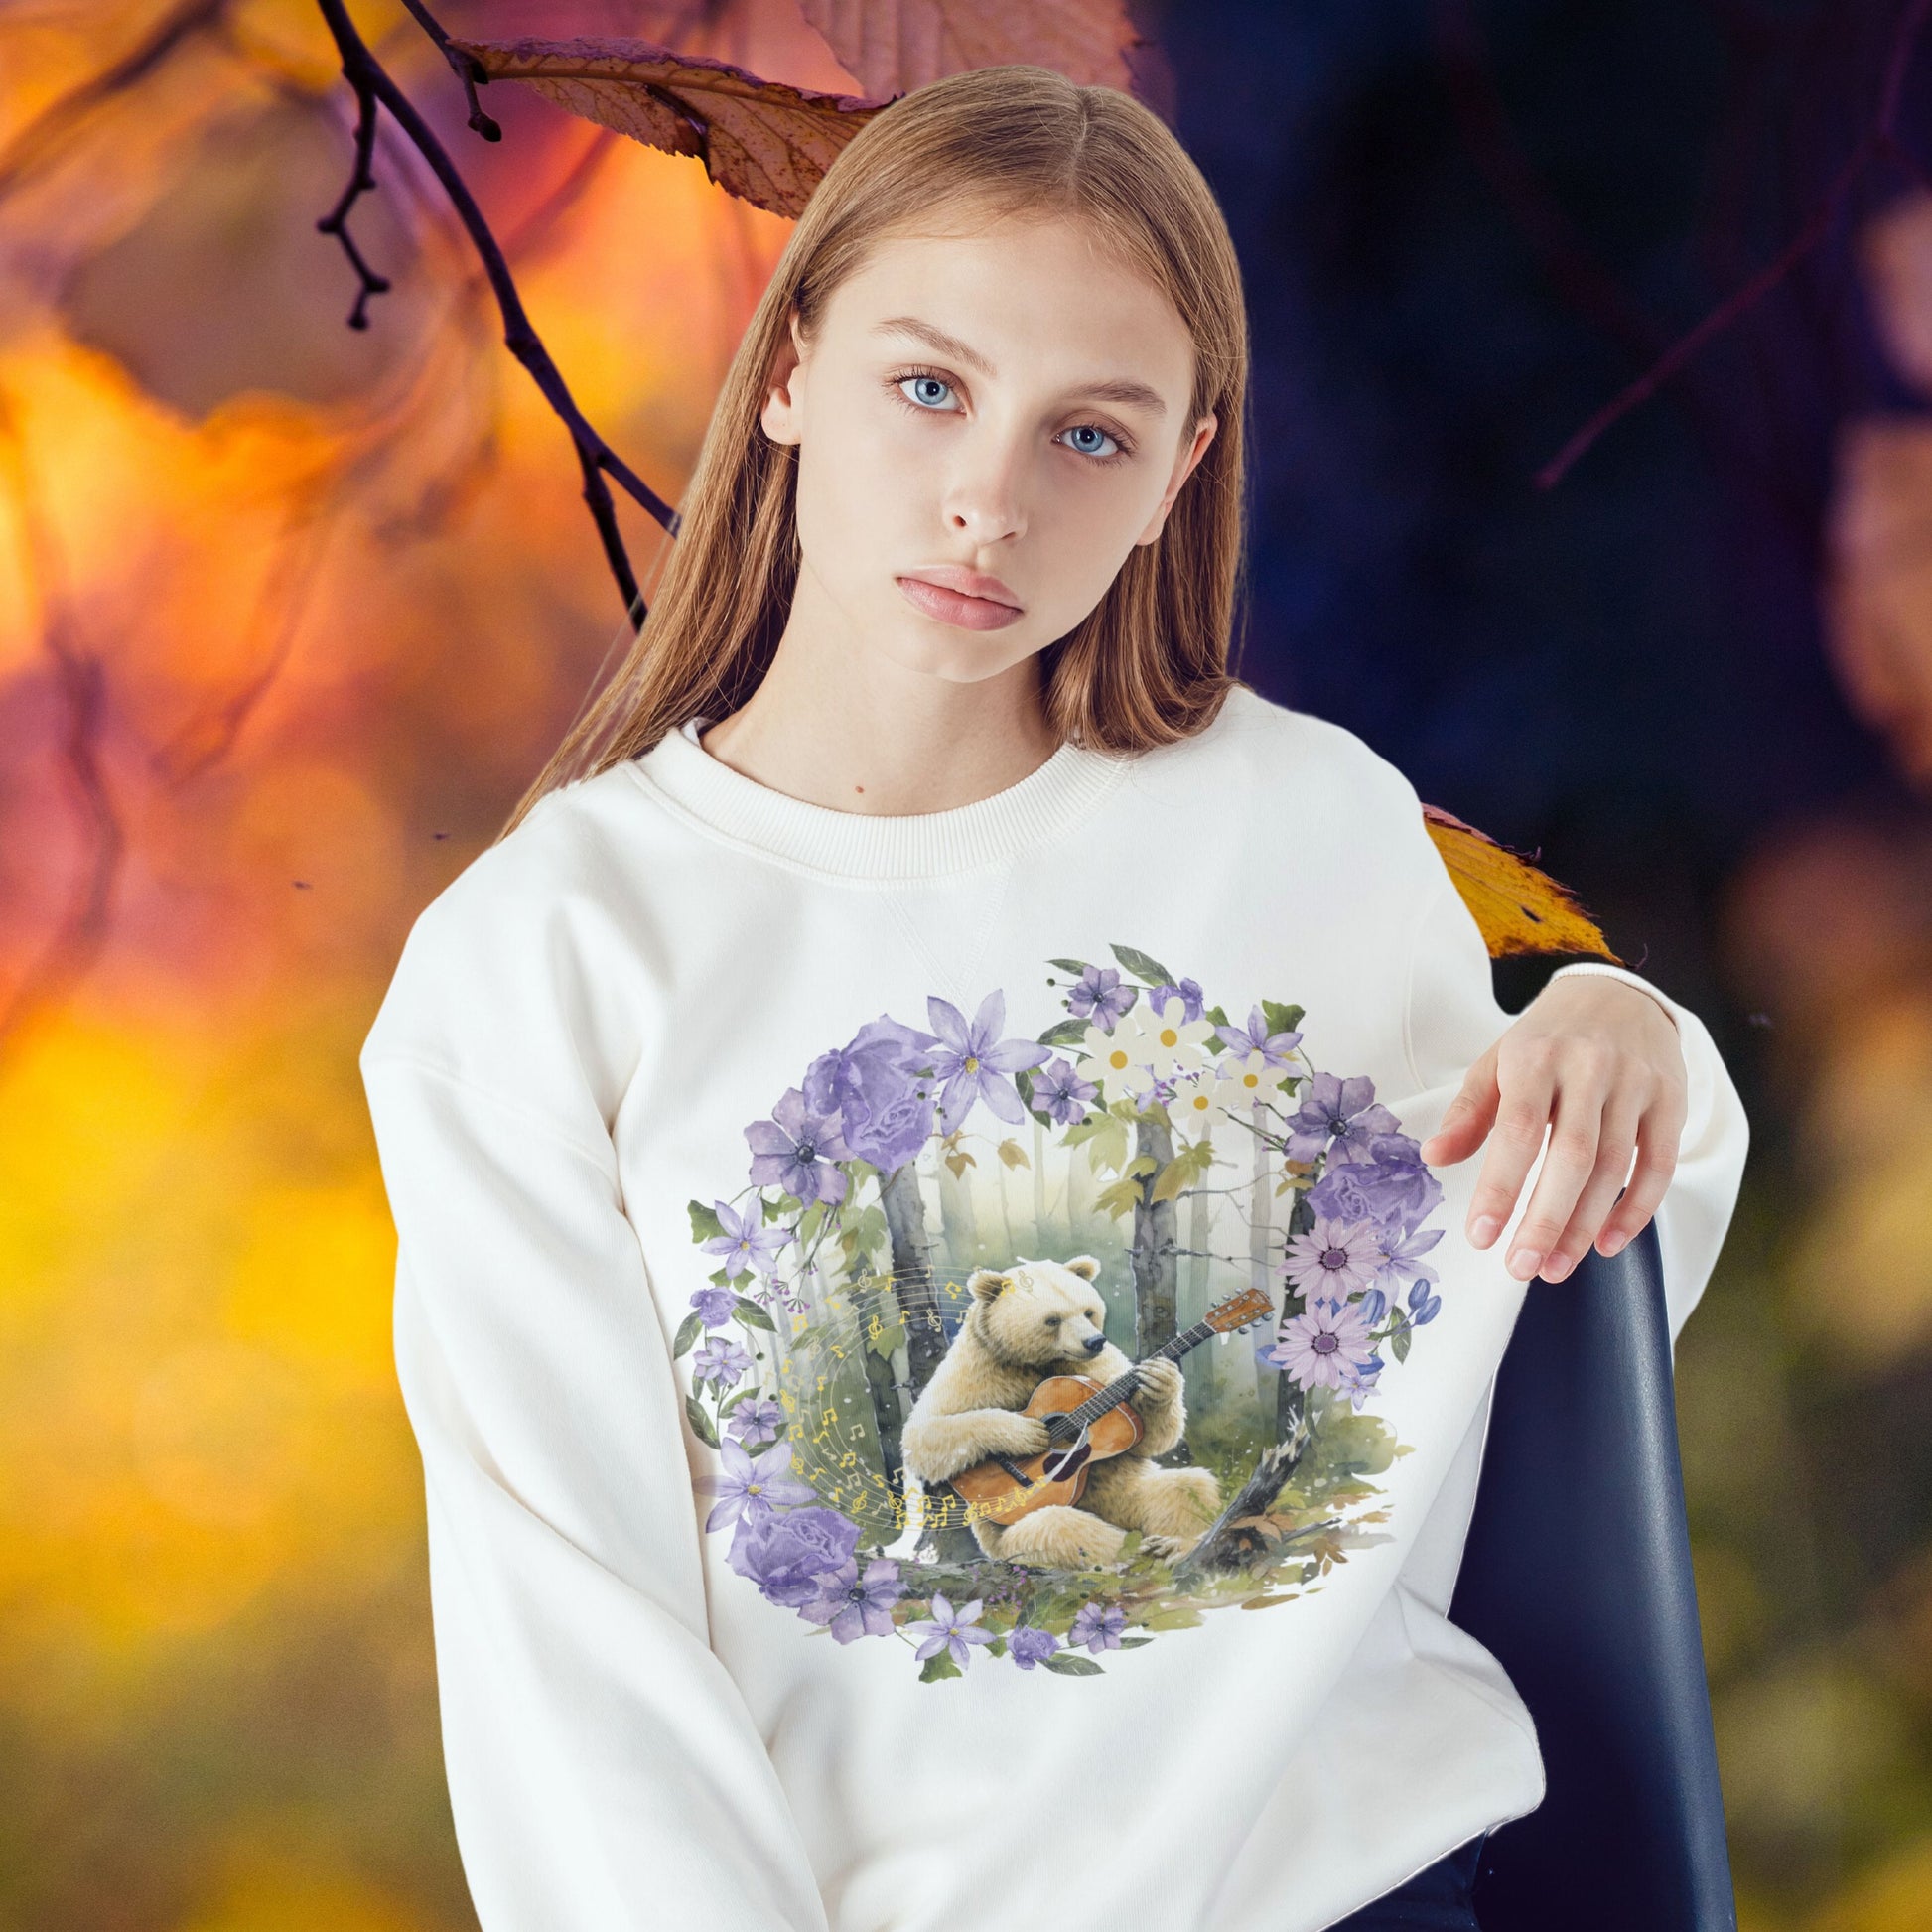 Bear Guitar Sweatshirt | Unisex Woodlands Design | Musical Bear Fashion Sweatshirt   